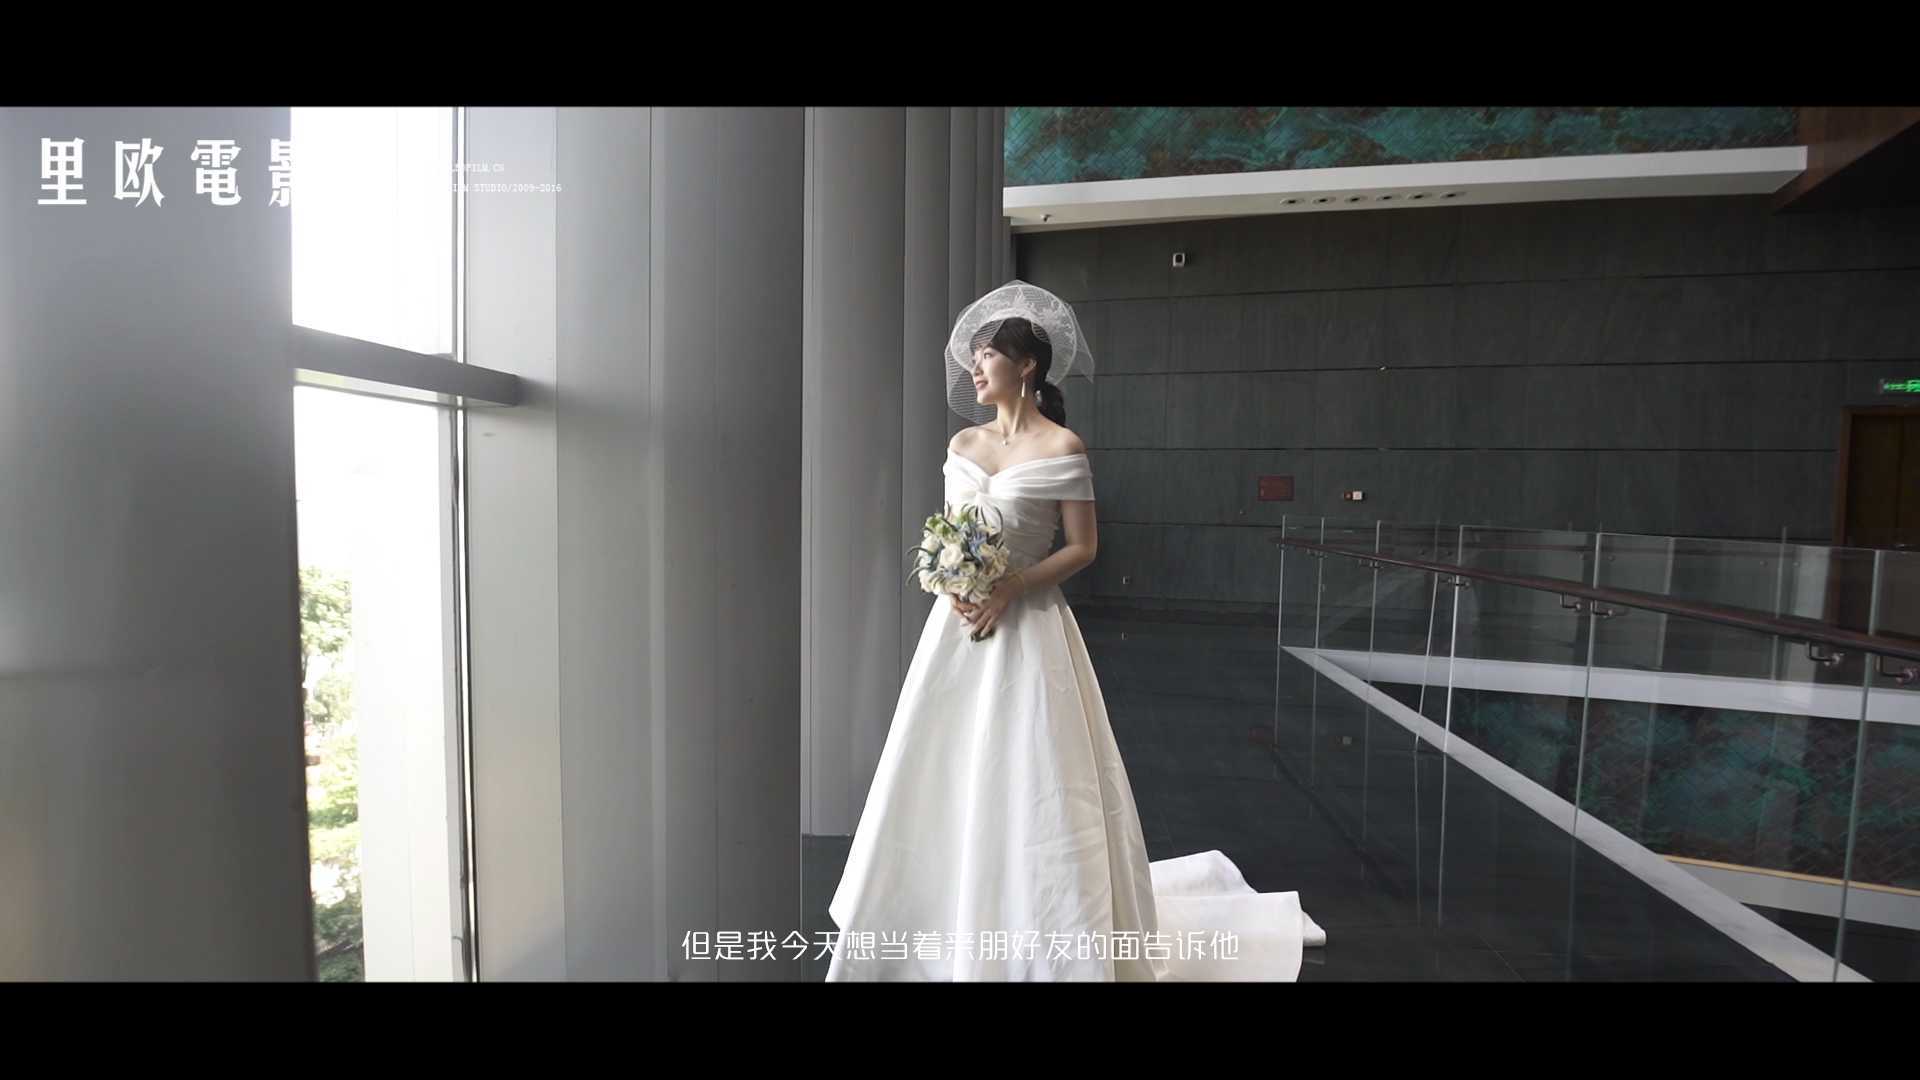 「 Zhou & Wang 」婚礼电影 | Leo Film（里欧影像）出品